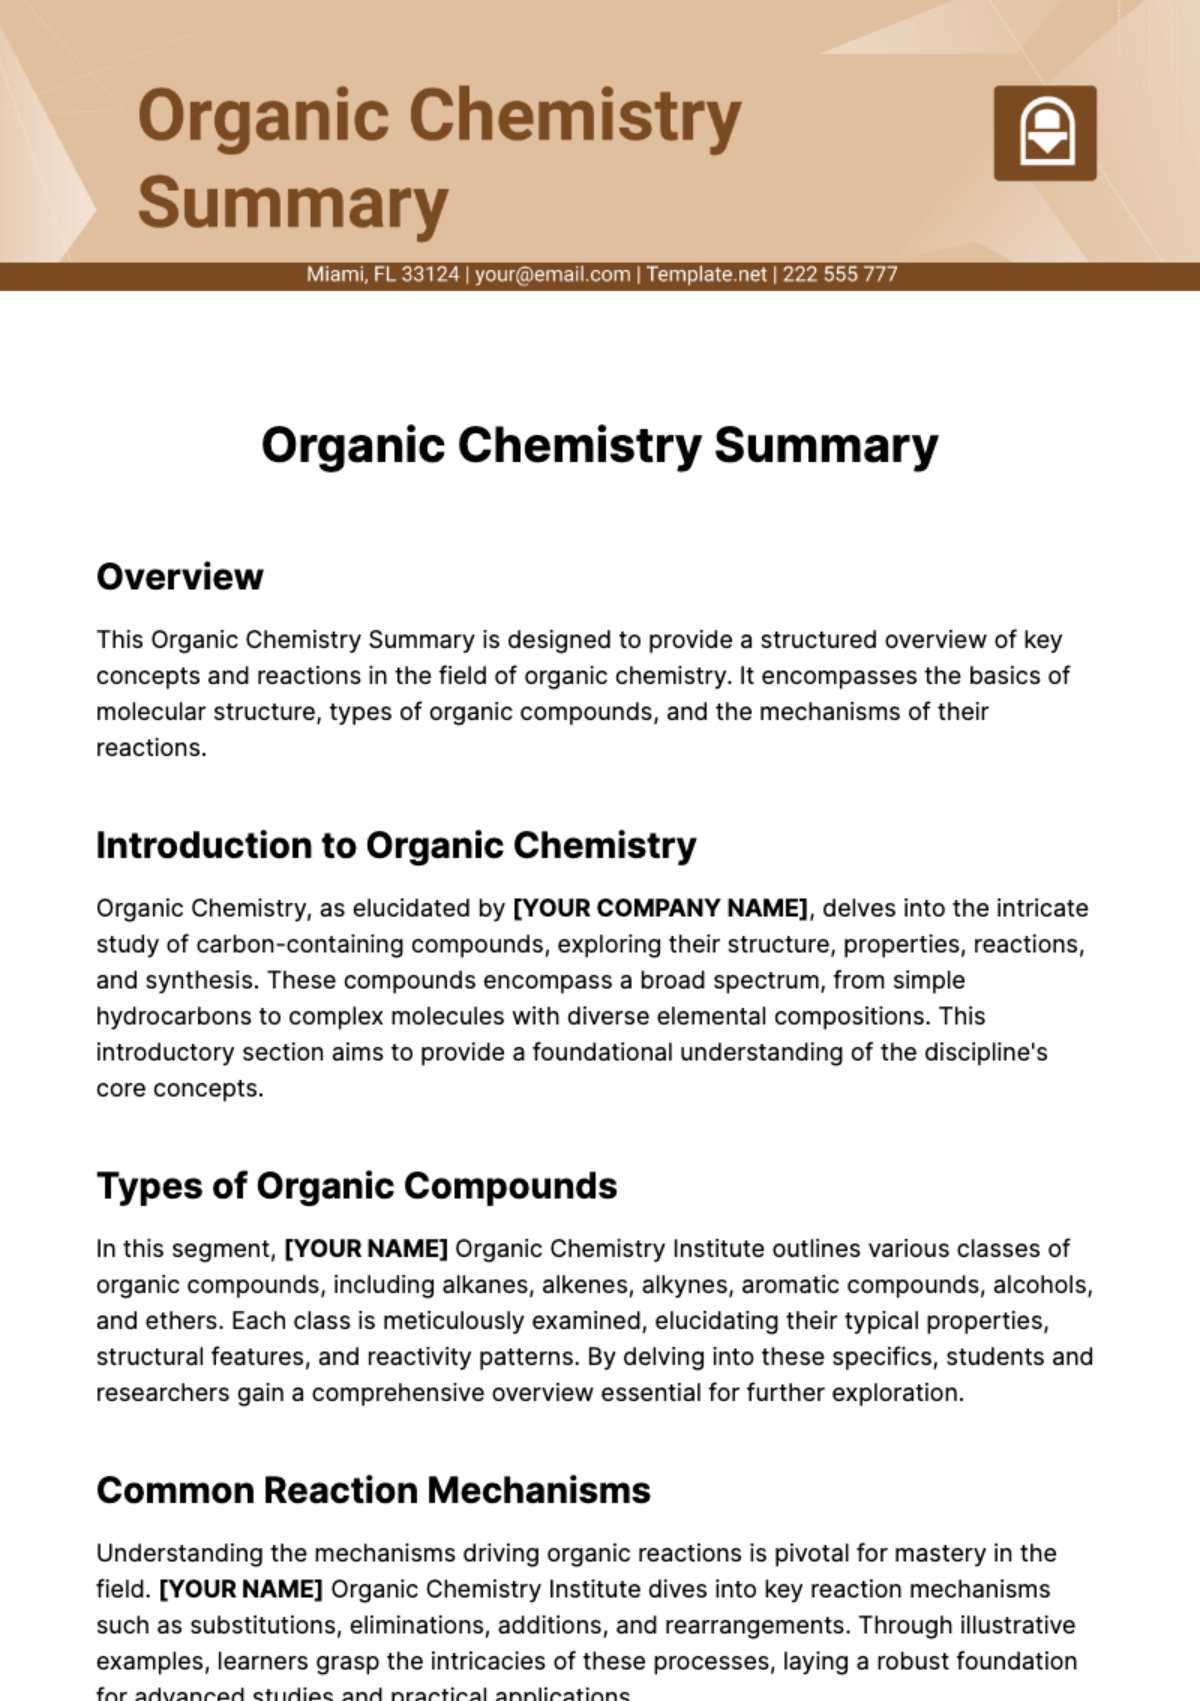 Free Organic Chemistry Summary Template